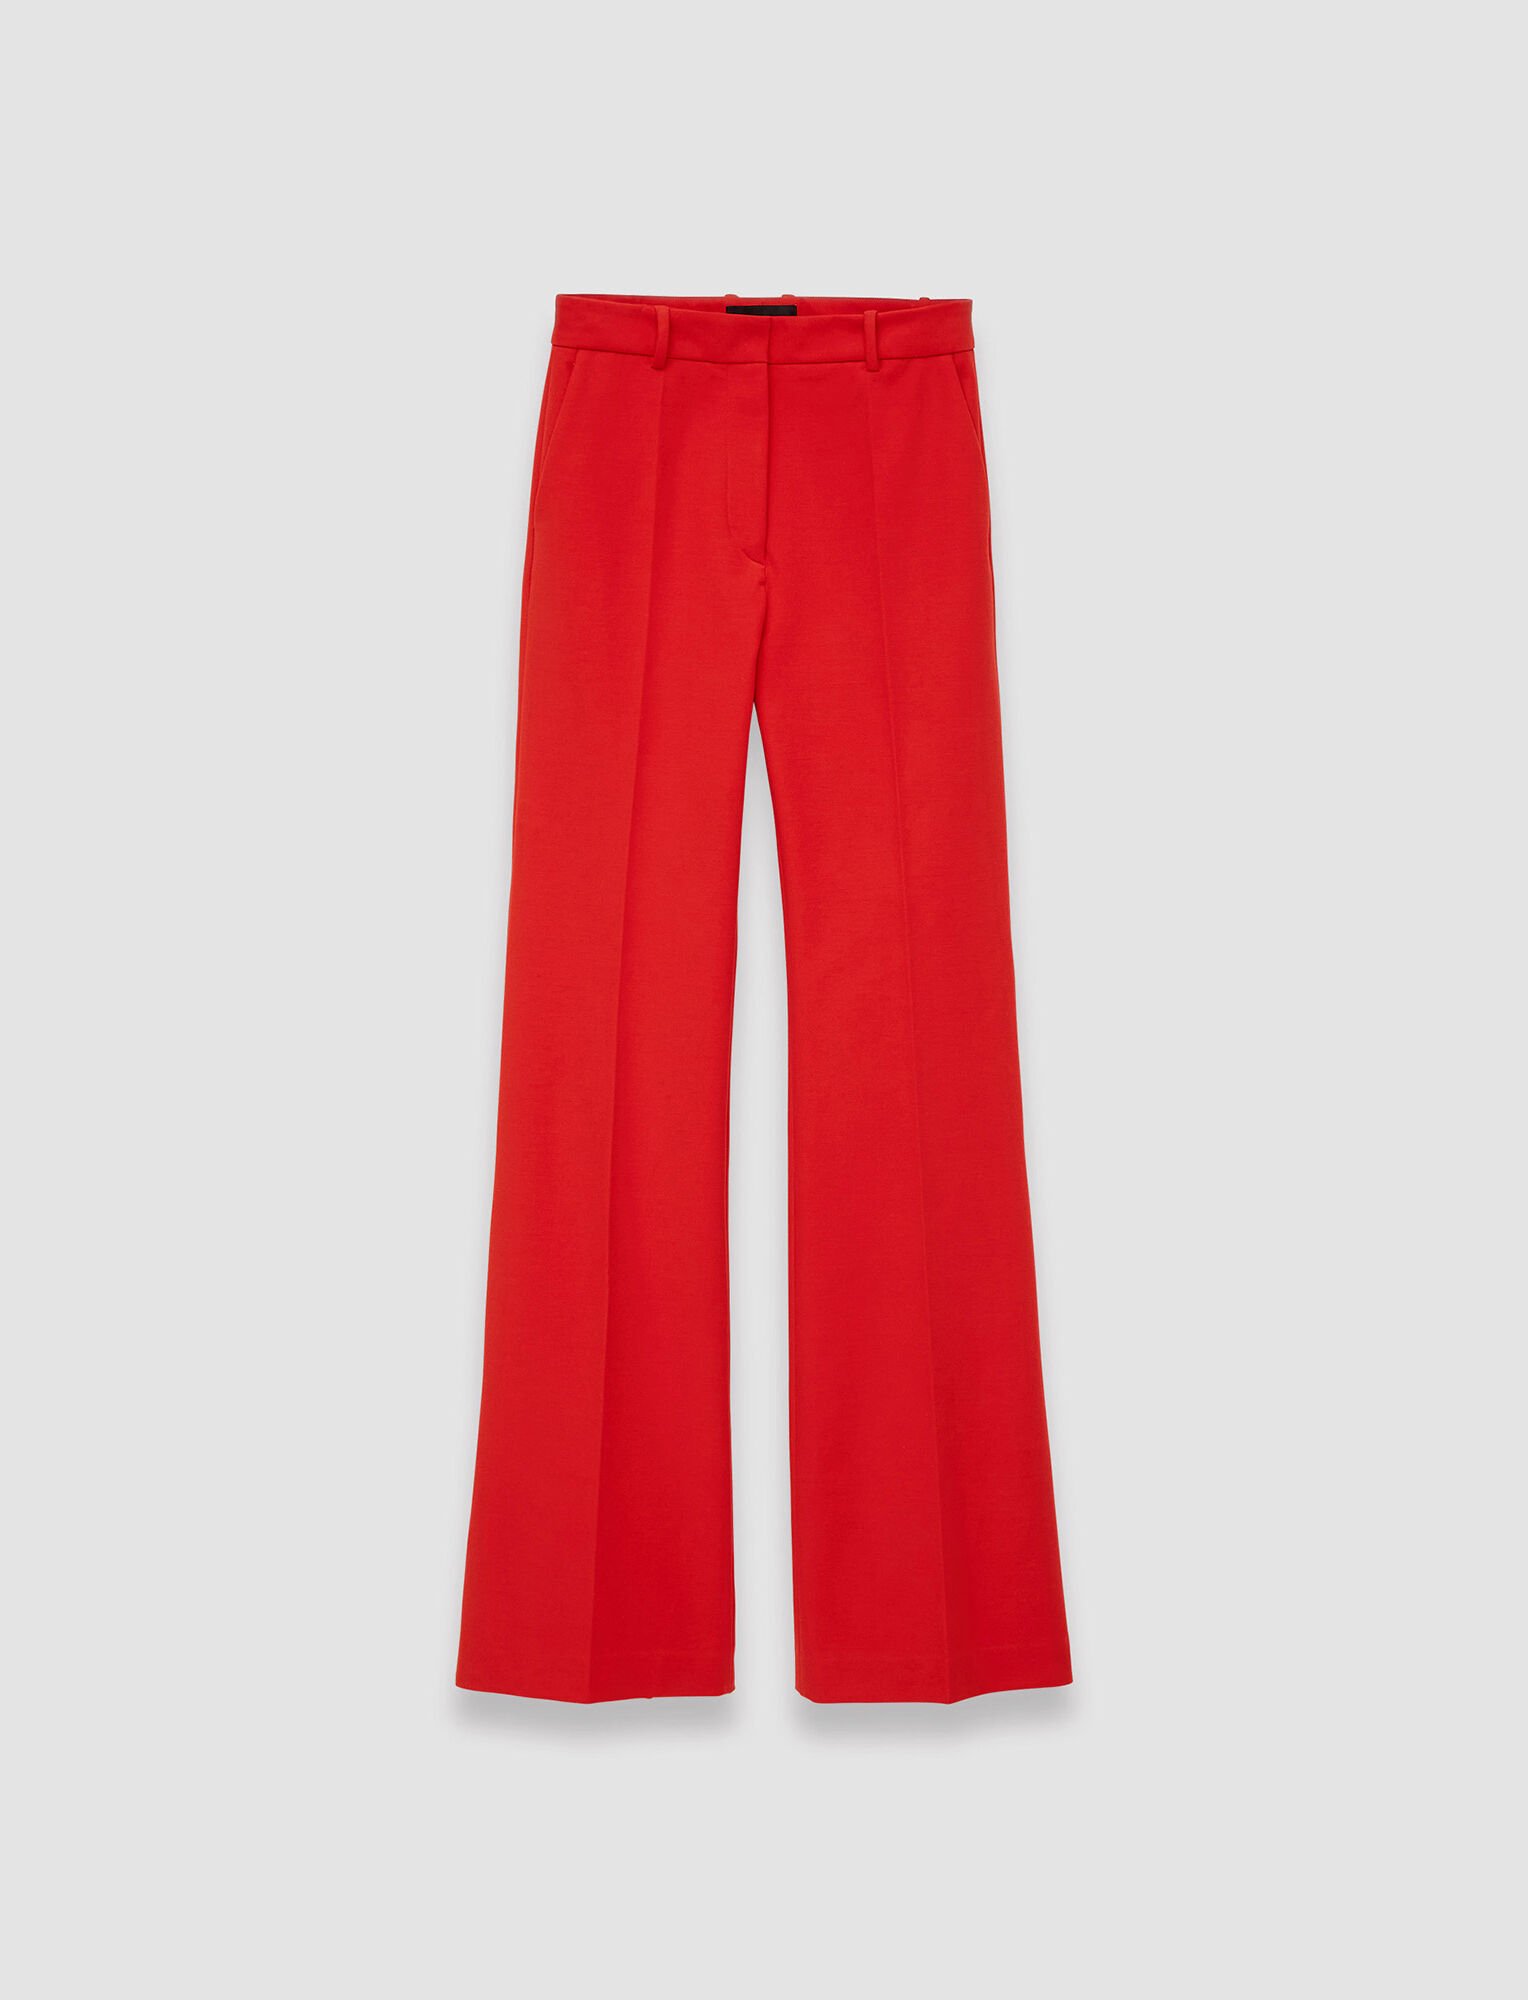 Joseph, Bi-Stretch Toile Tafira Trousers, in Crimson